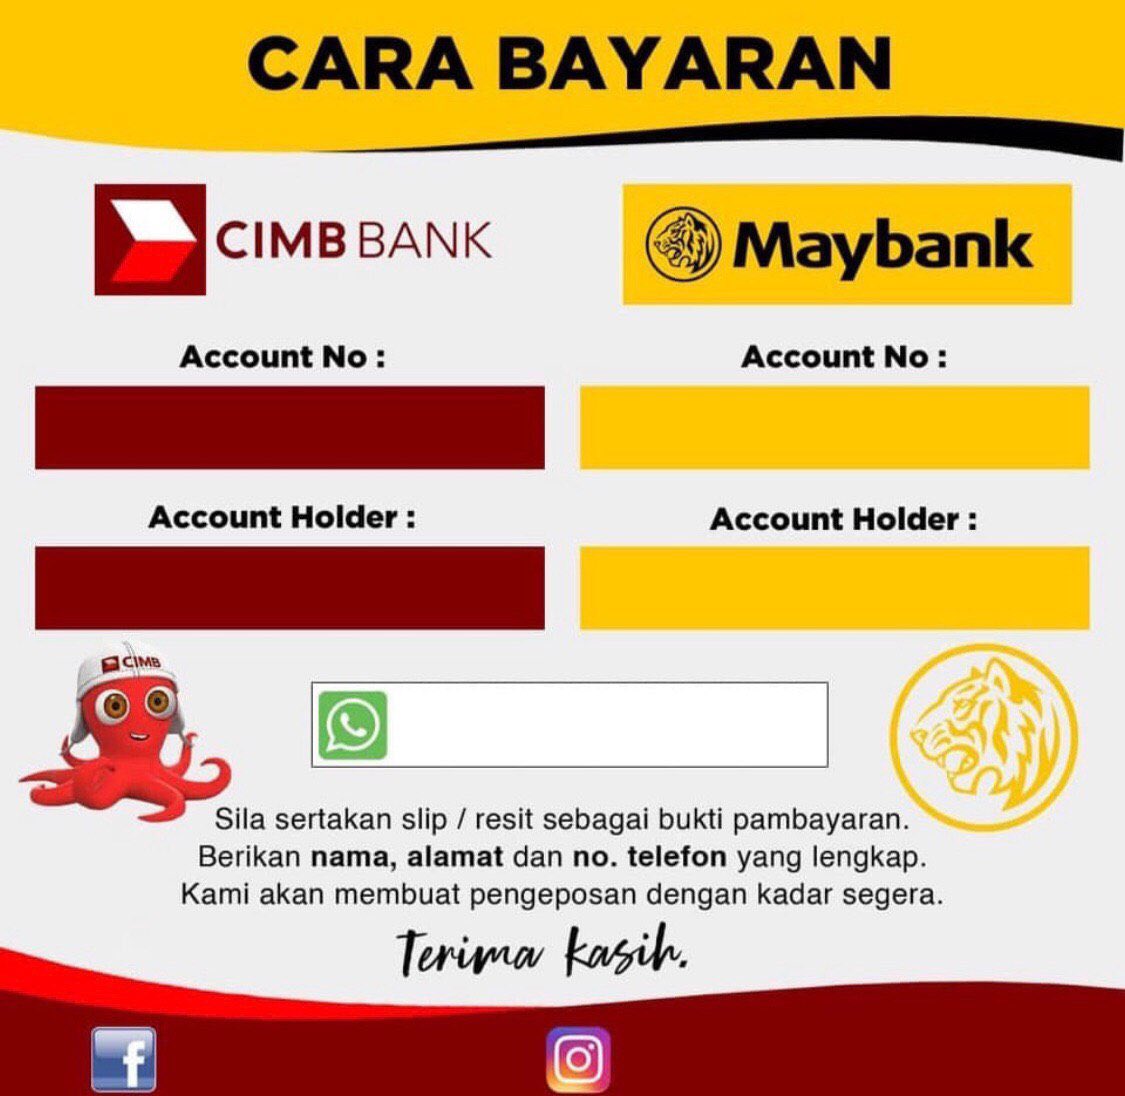 Cara Bank In Duit Bank Islam Payment method - Blog Chara